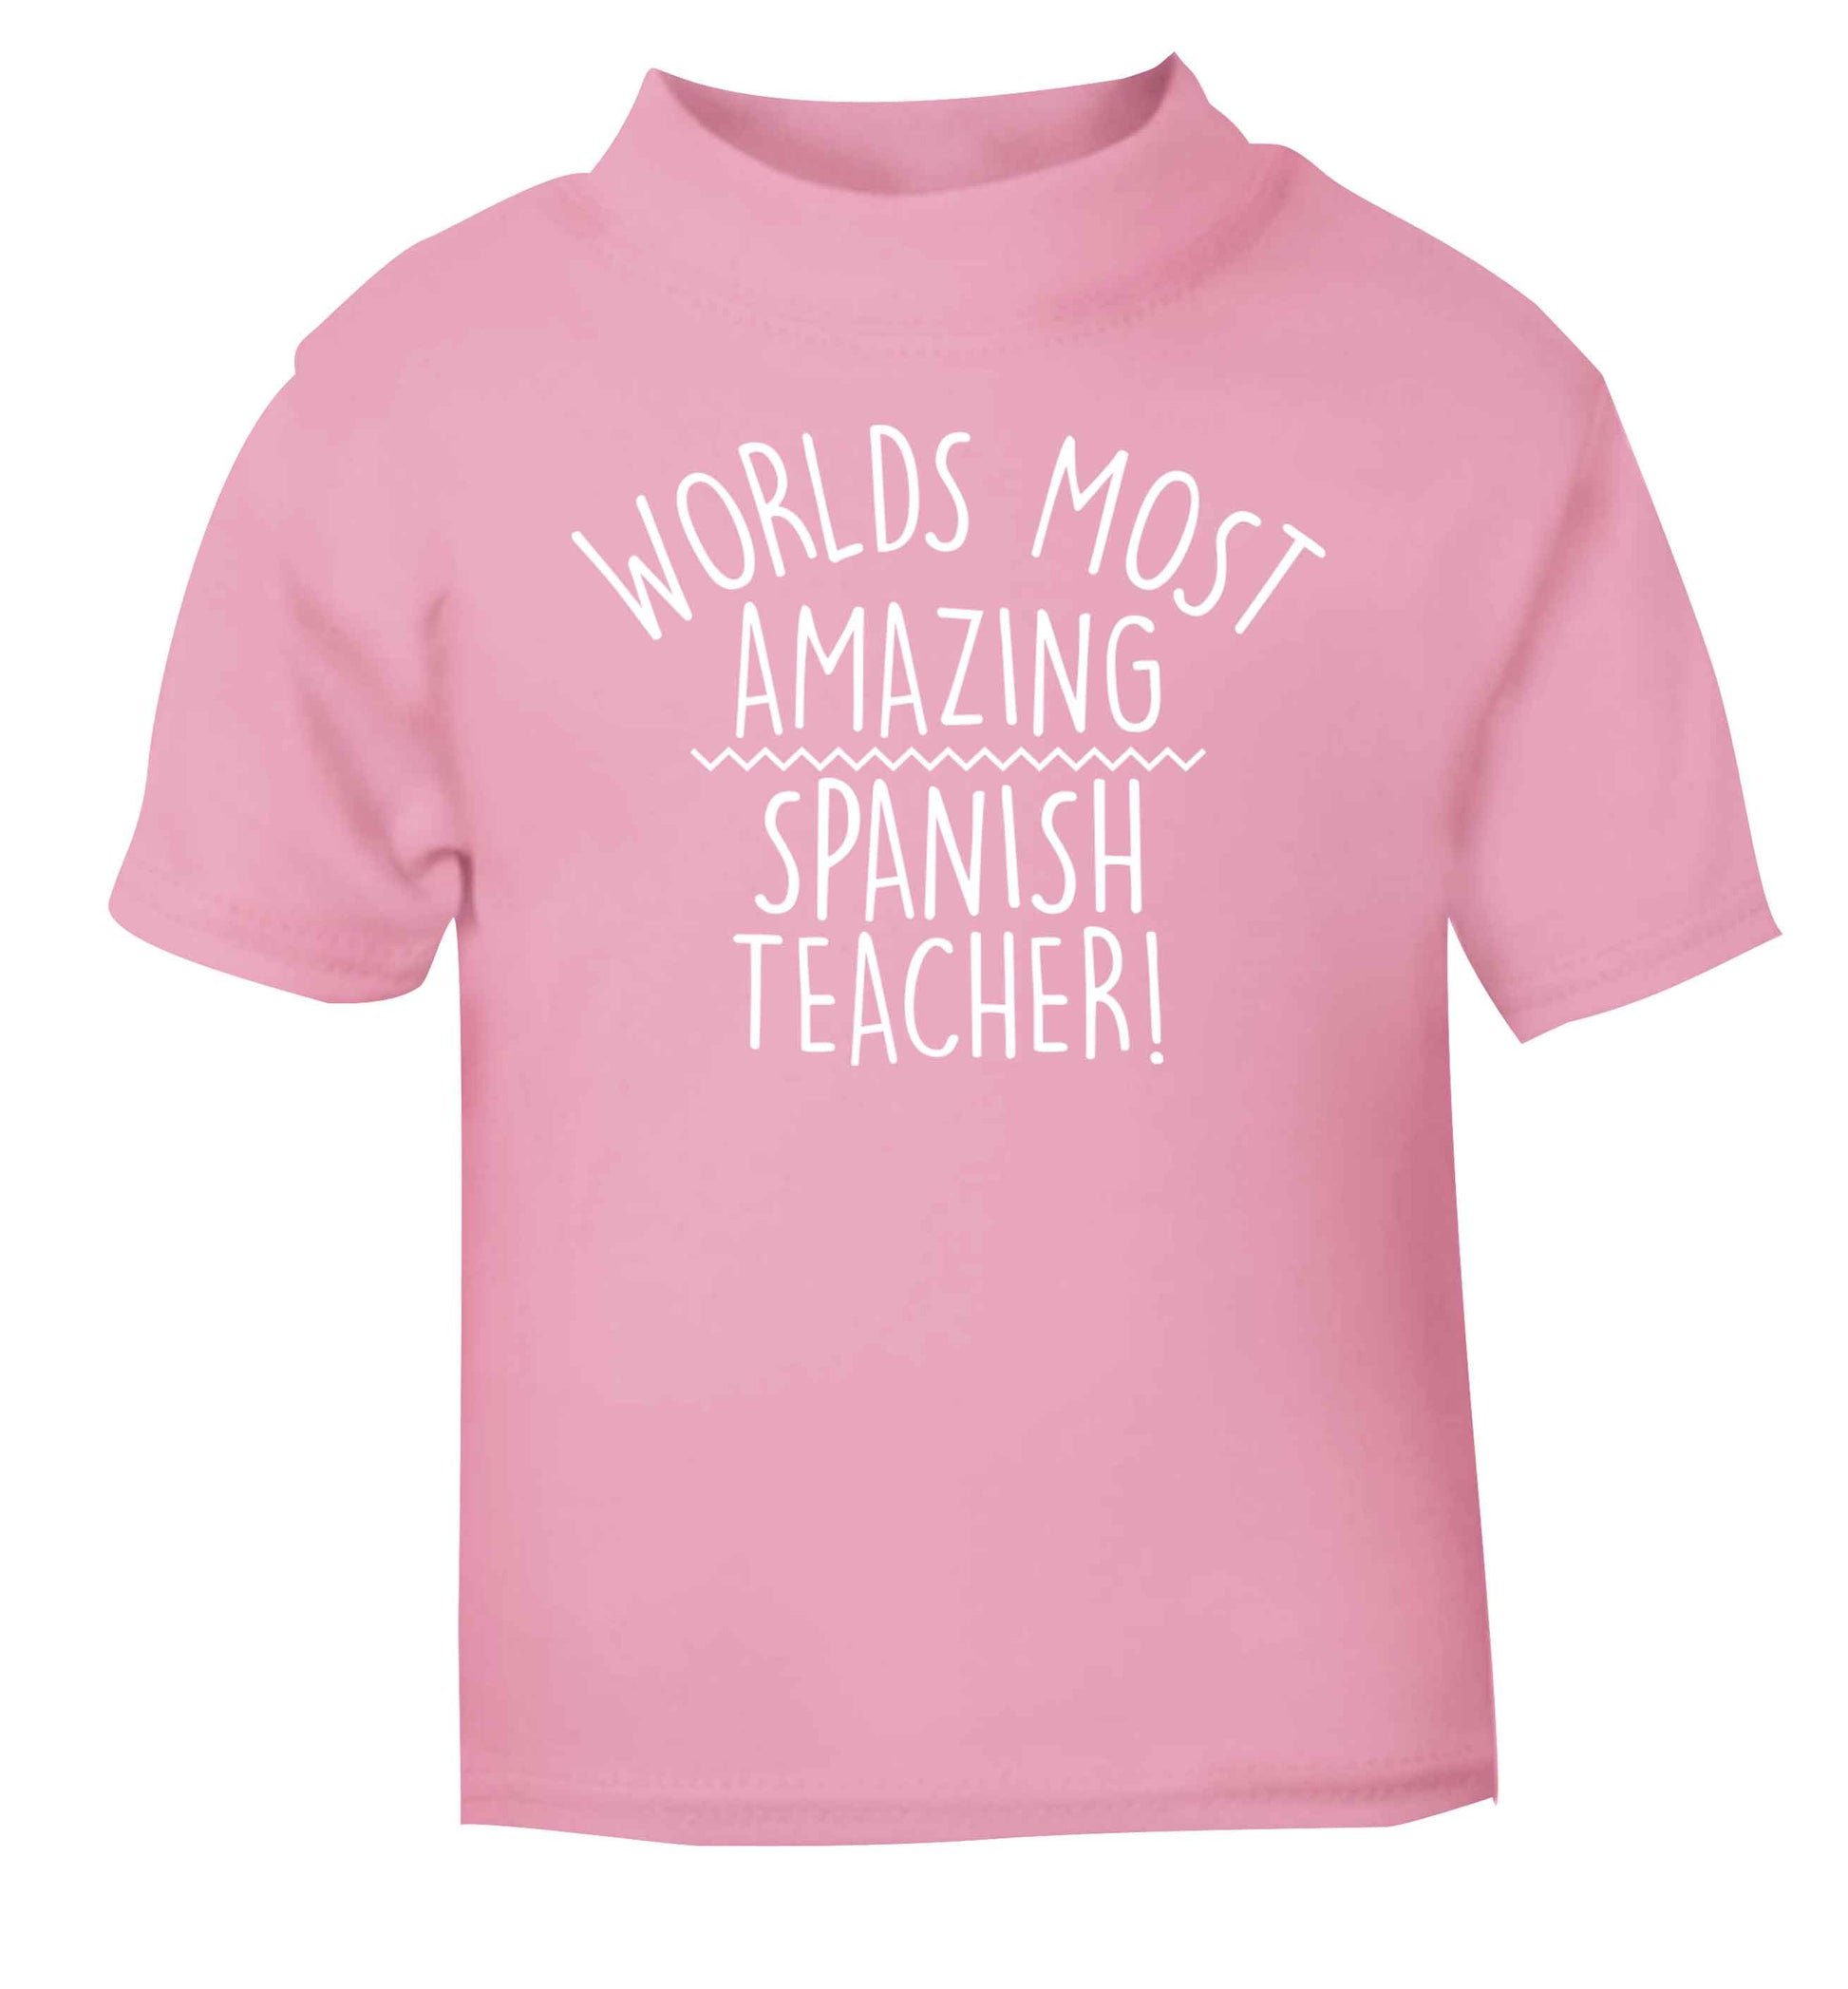 Worlds most amazing Spanish teacher light pink baby toddler Tshirt 2 Years